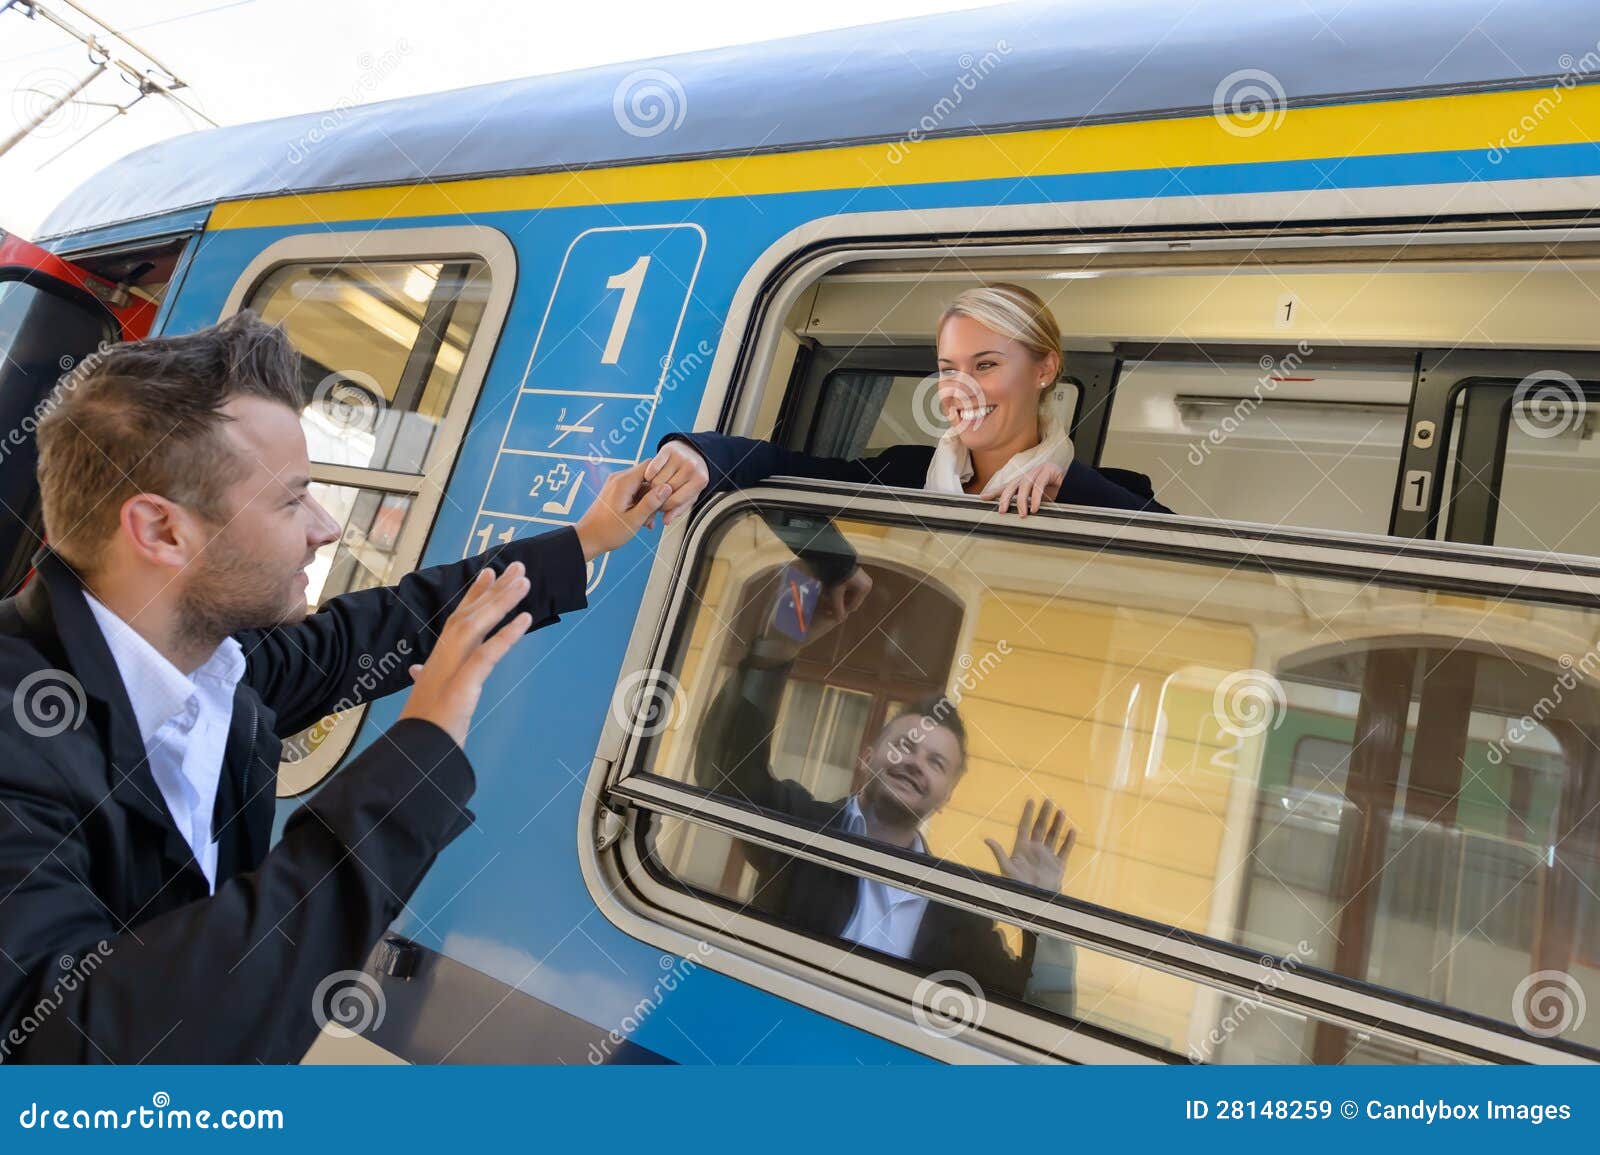 man saying goodbye to woman on train